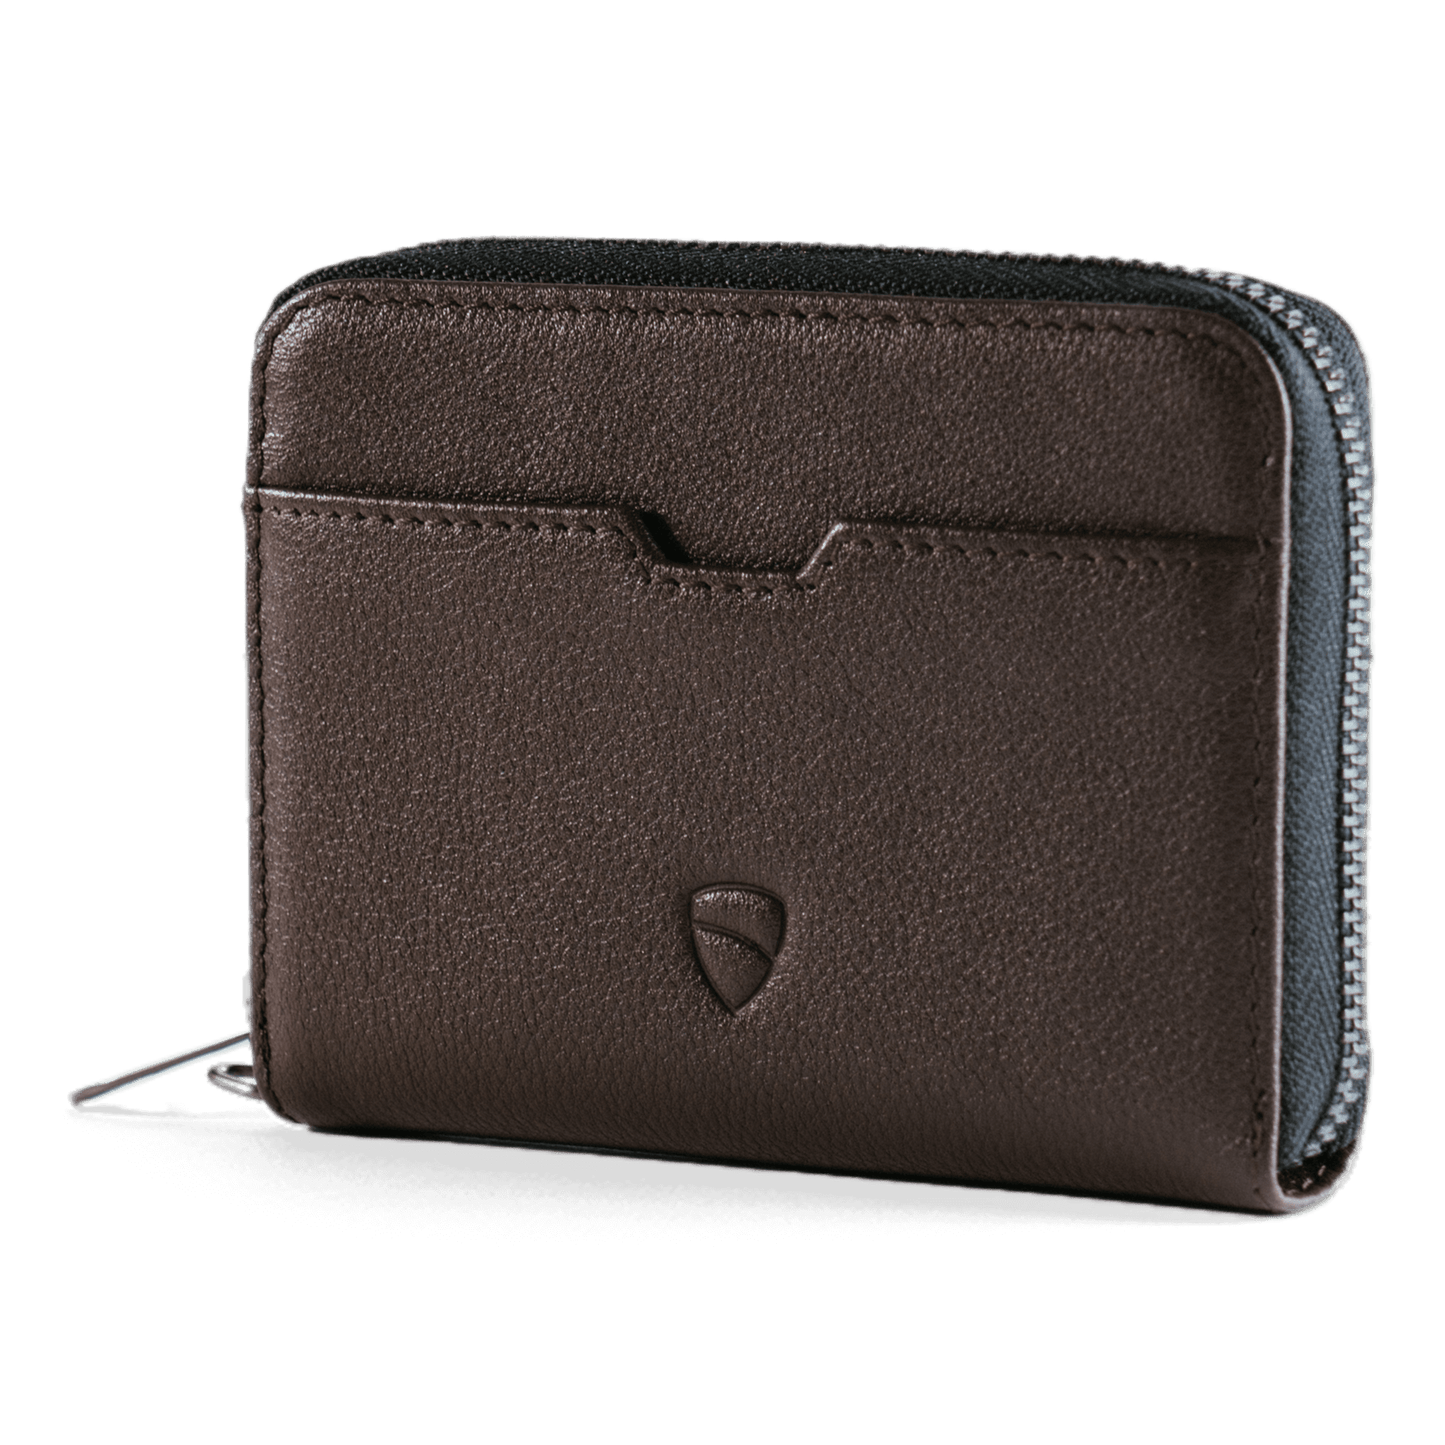 Luxury leather wallet Mayfair